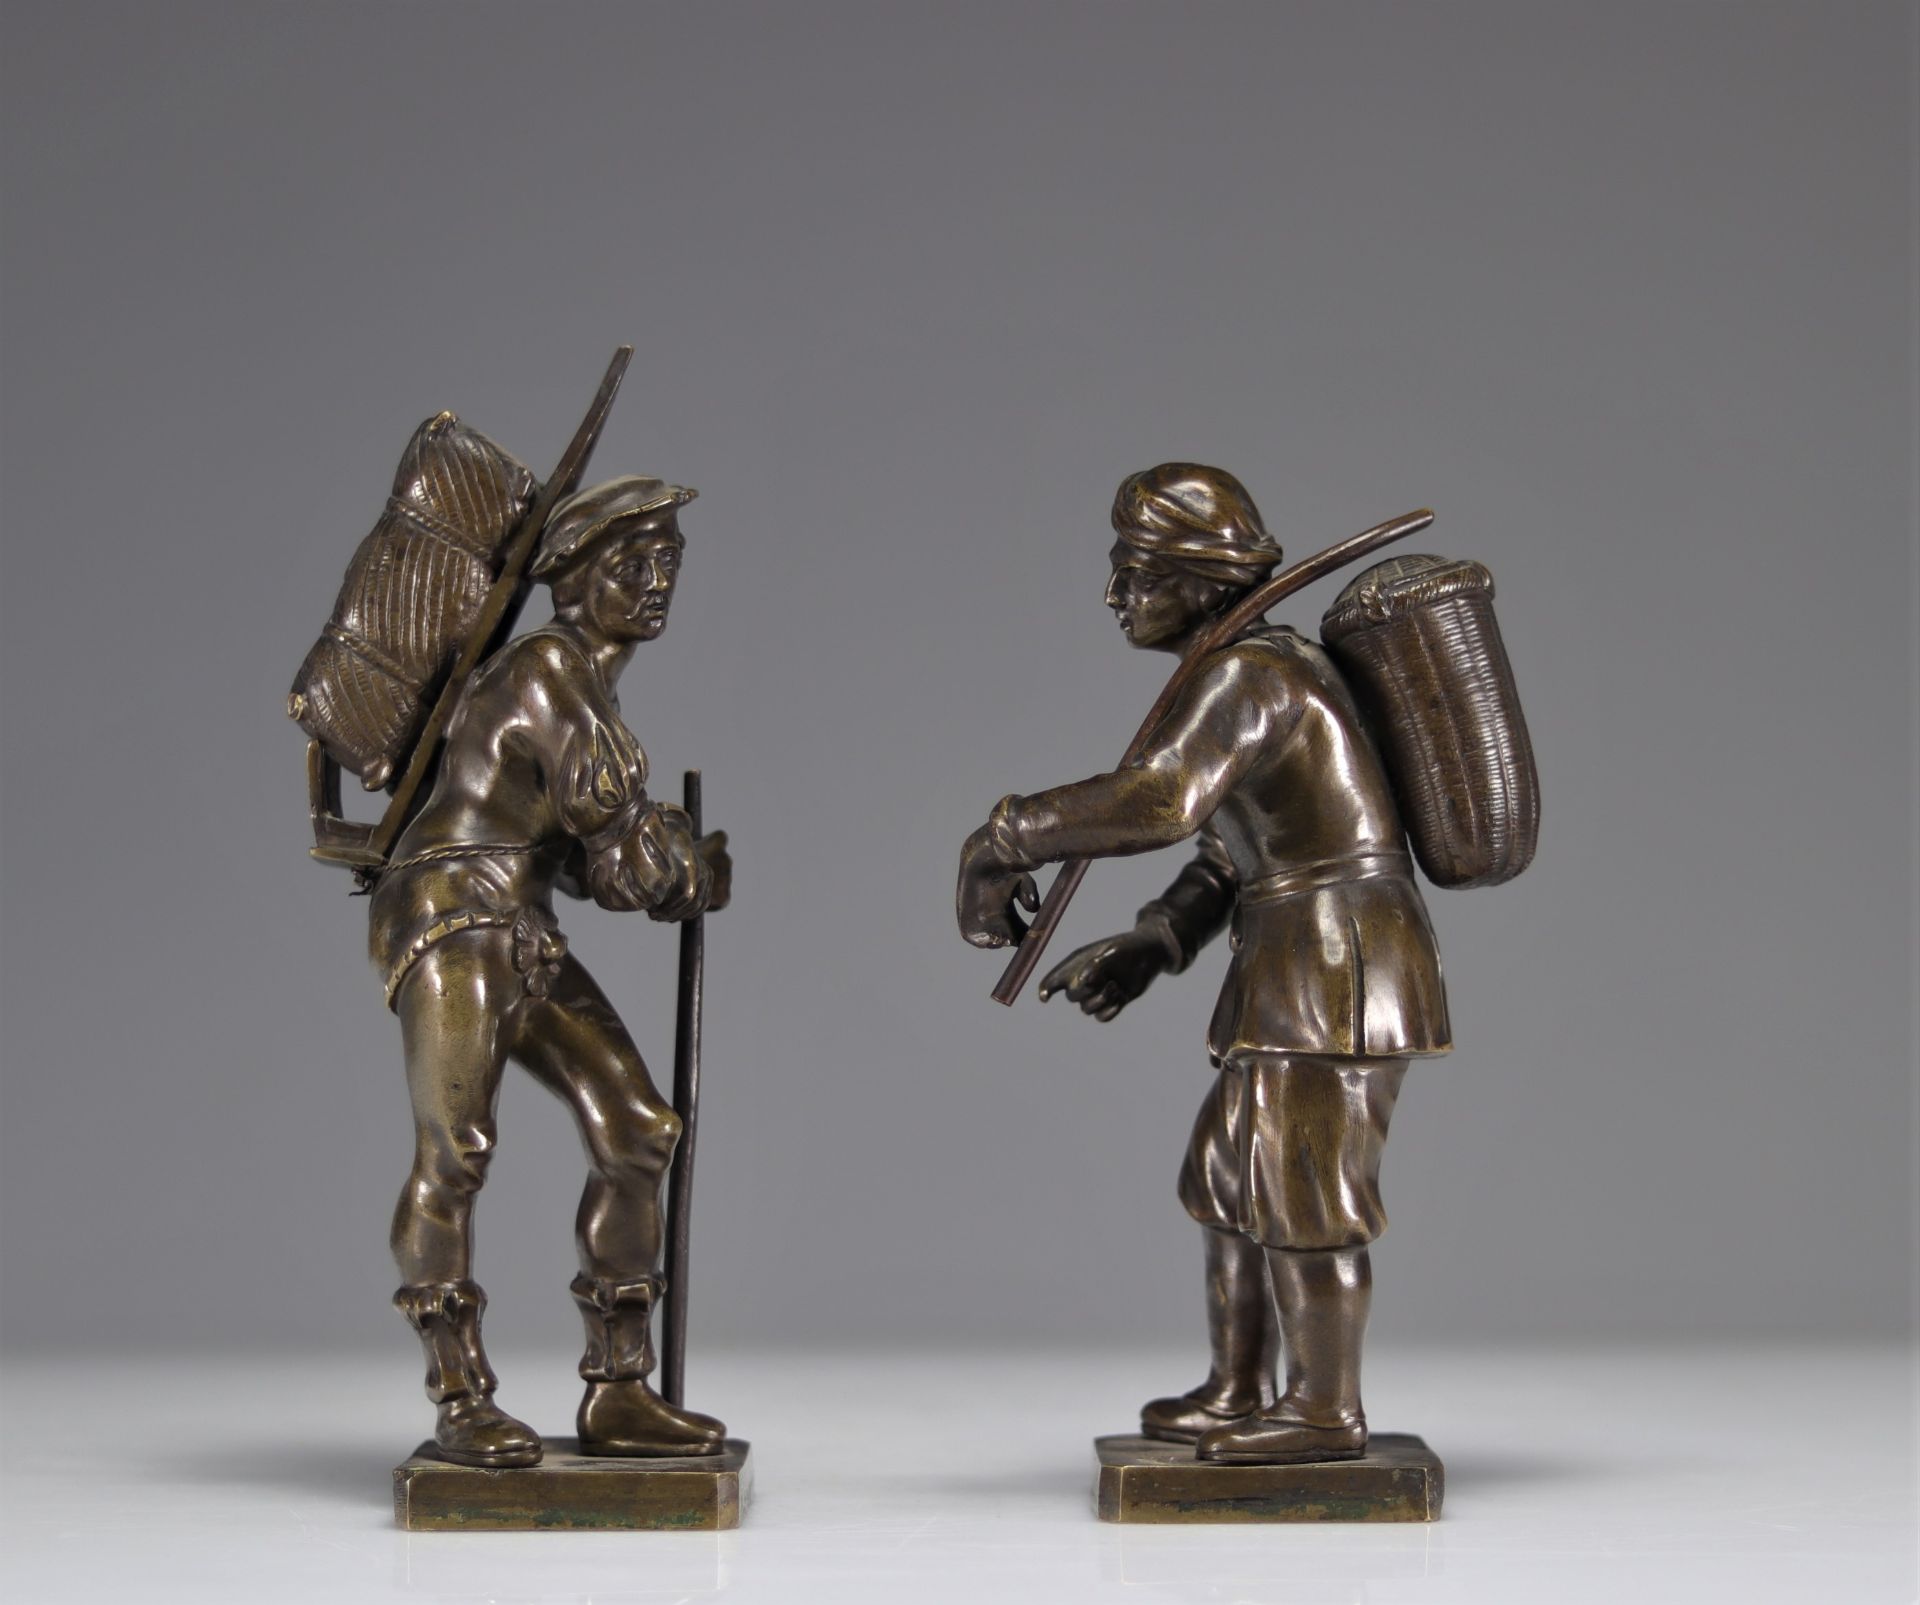 Bronzes (2) pair of late 18th century Italian work characters